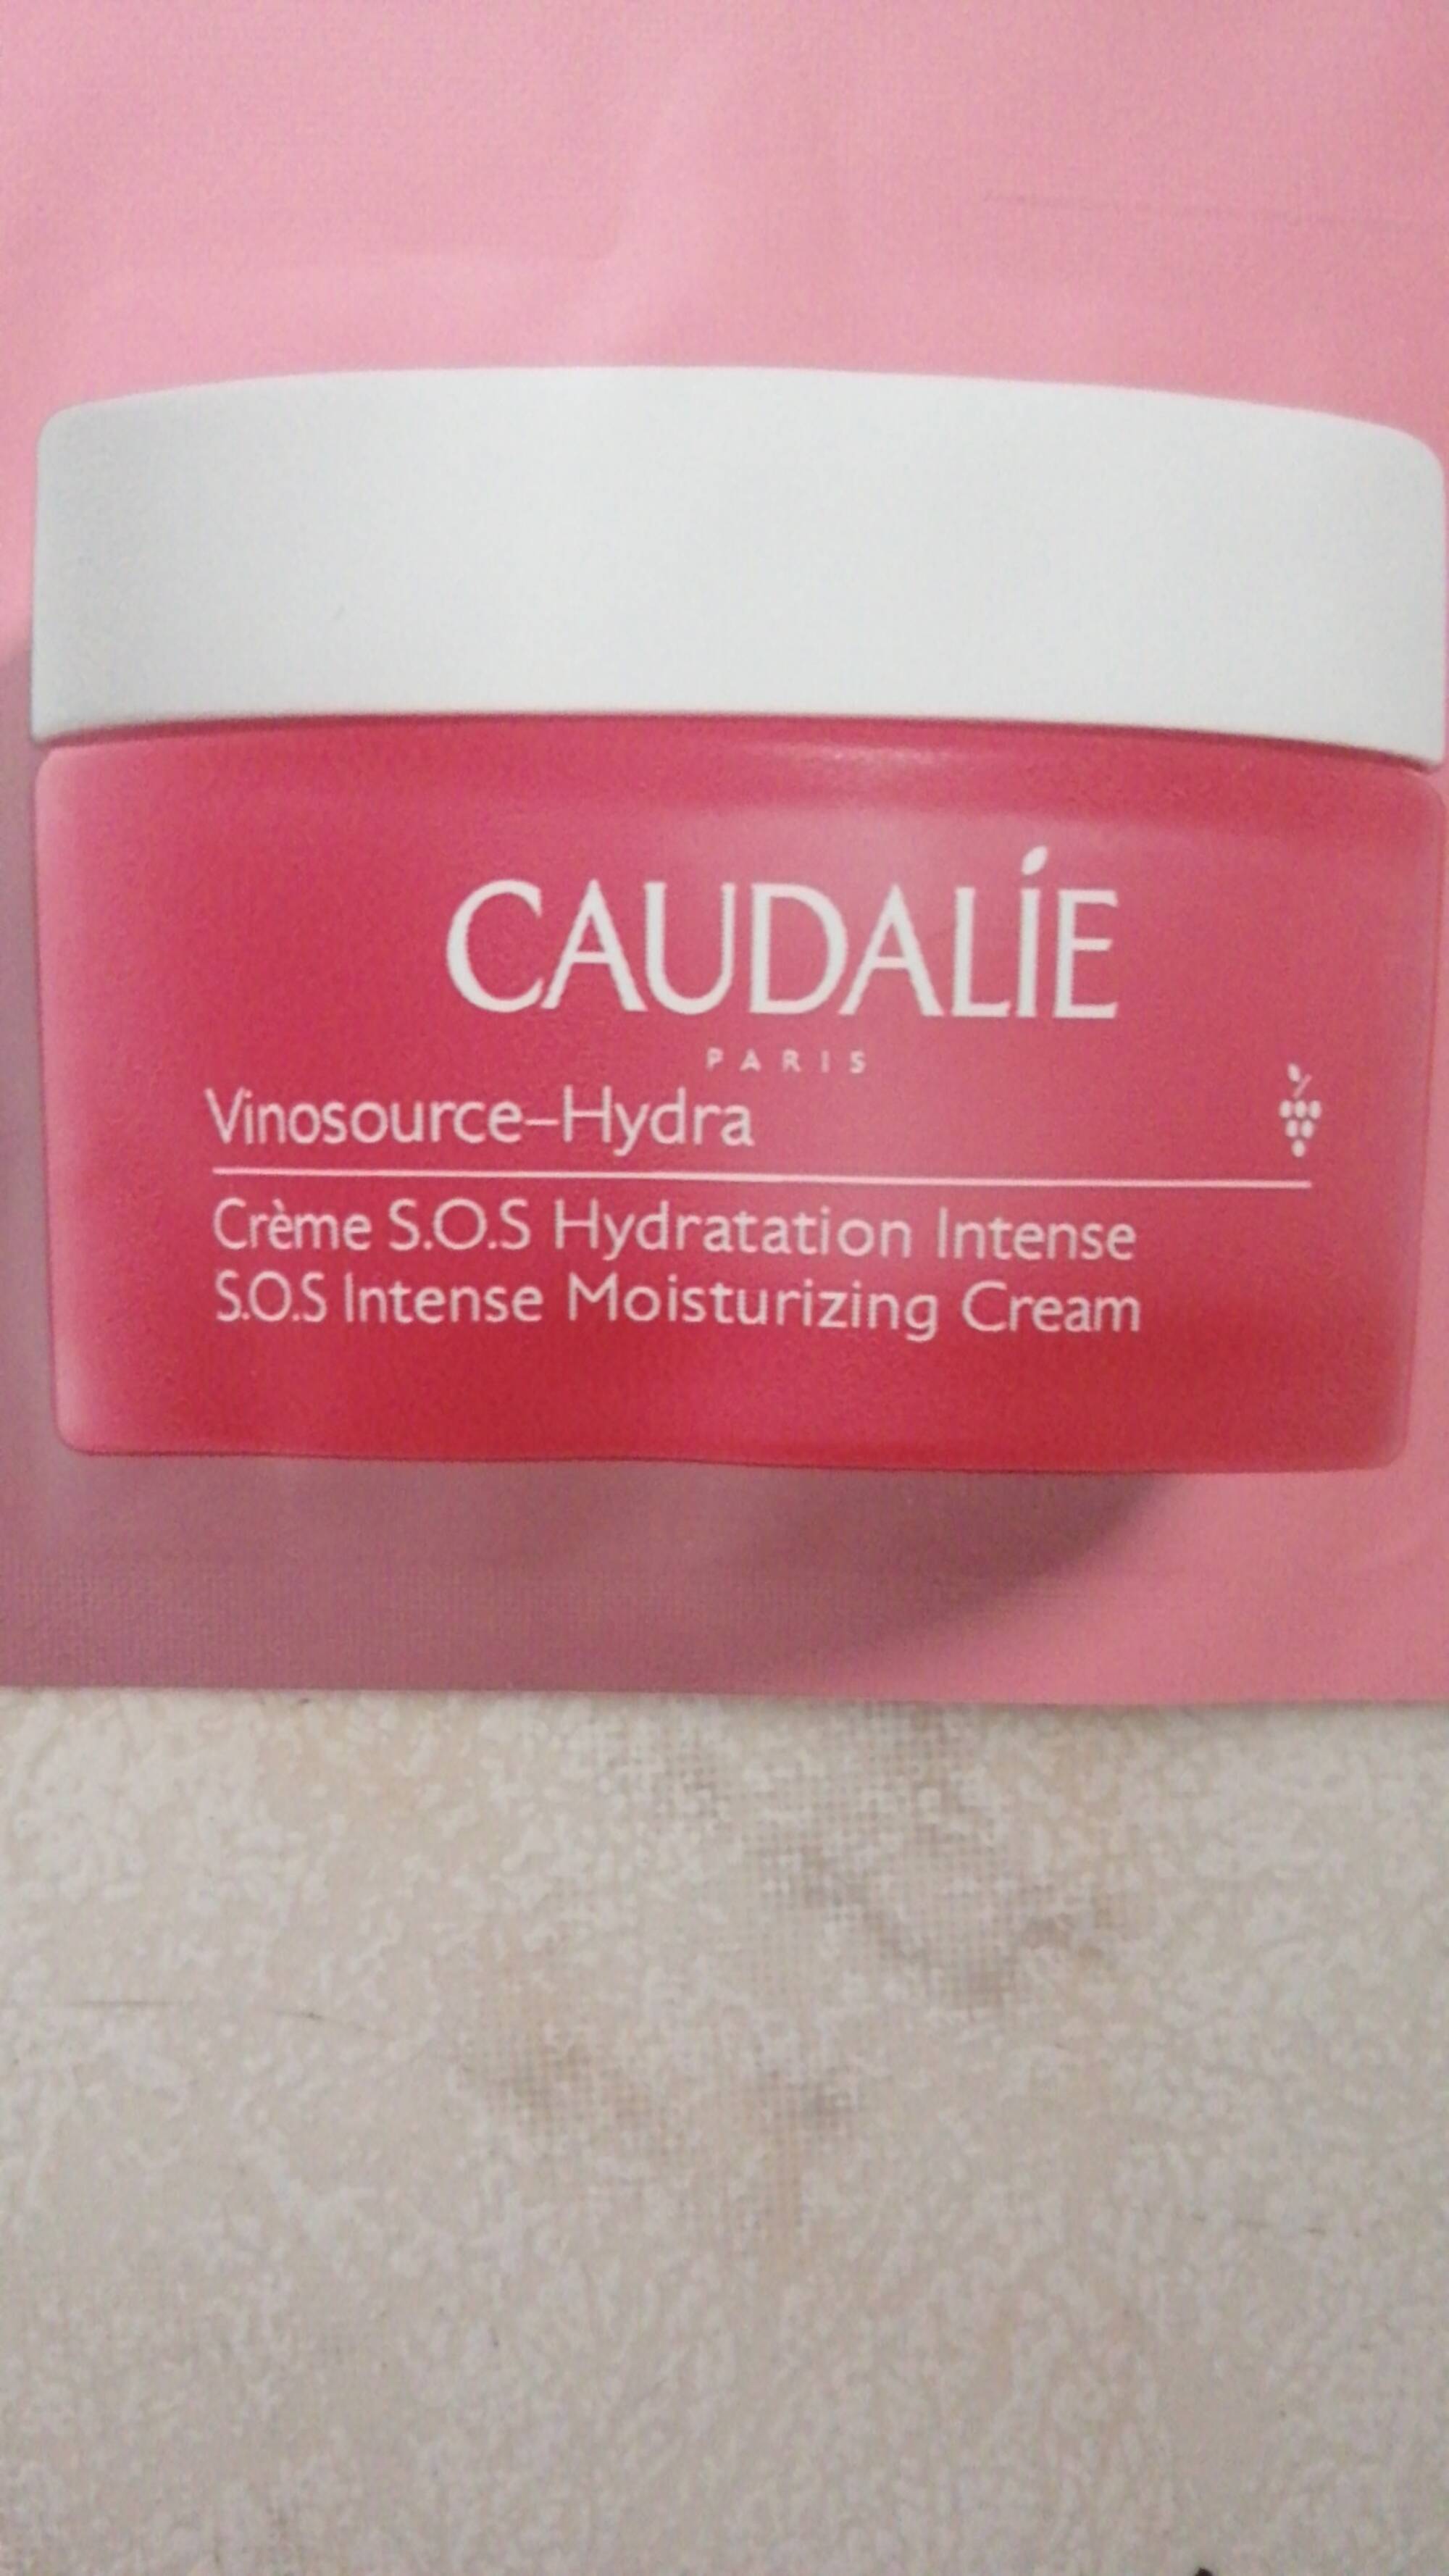 CAUDALIE - Vinosource-Hydra - Crème S.O.S Hydratation intense